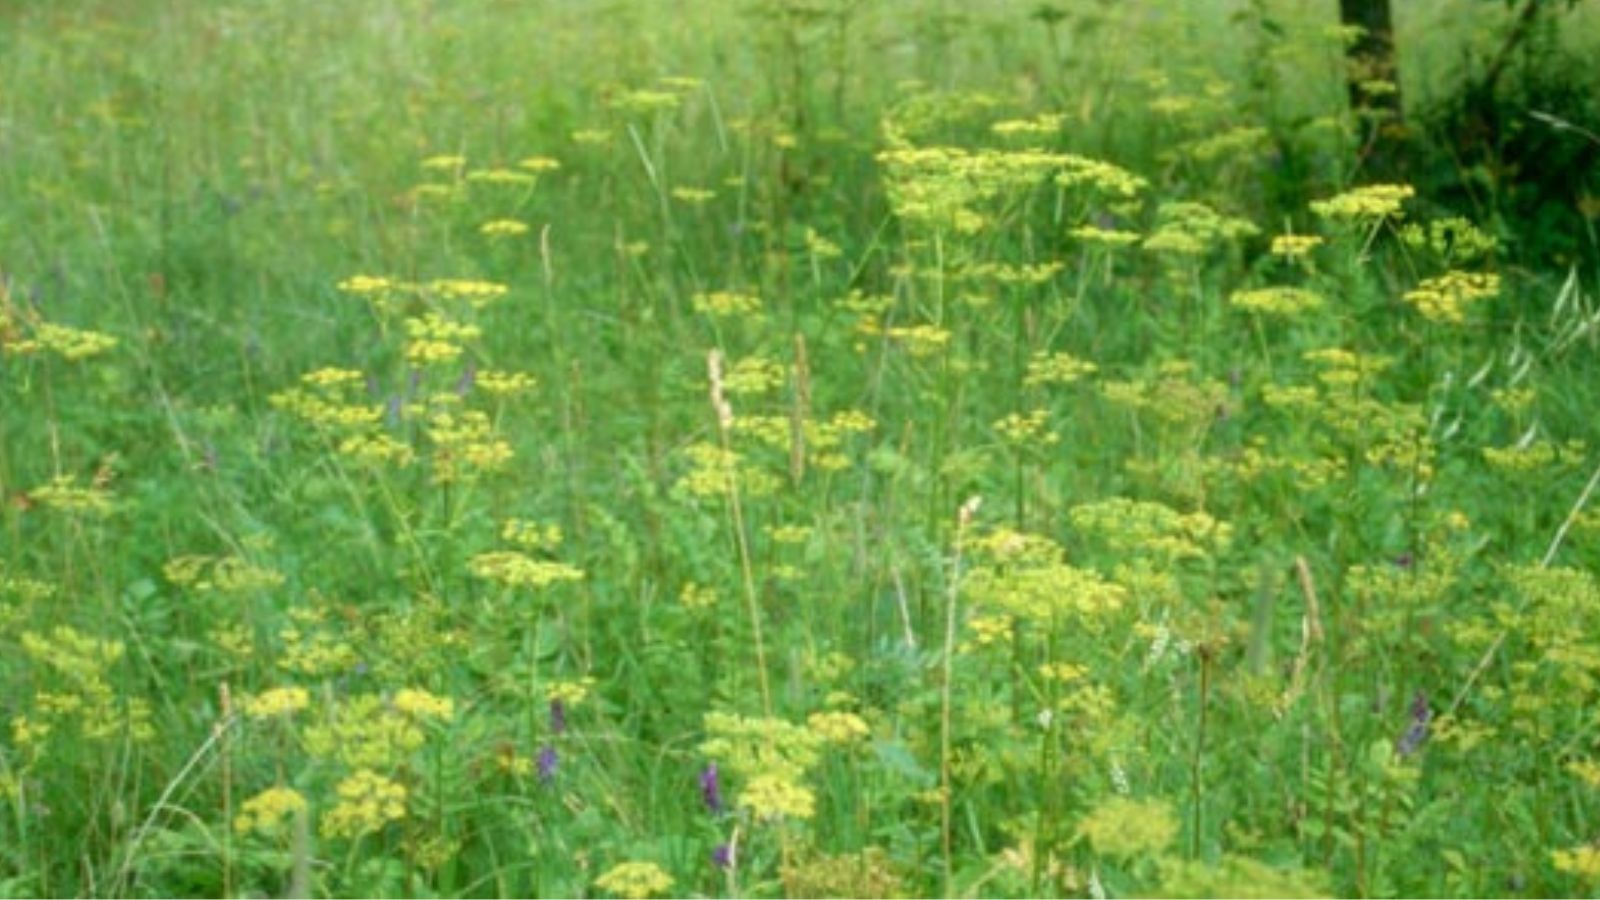 Bill seeks funding to mitigate spread of wild parsnip, other invasive species in Wisconsin